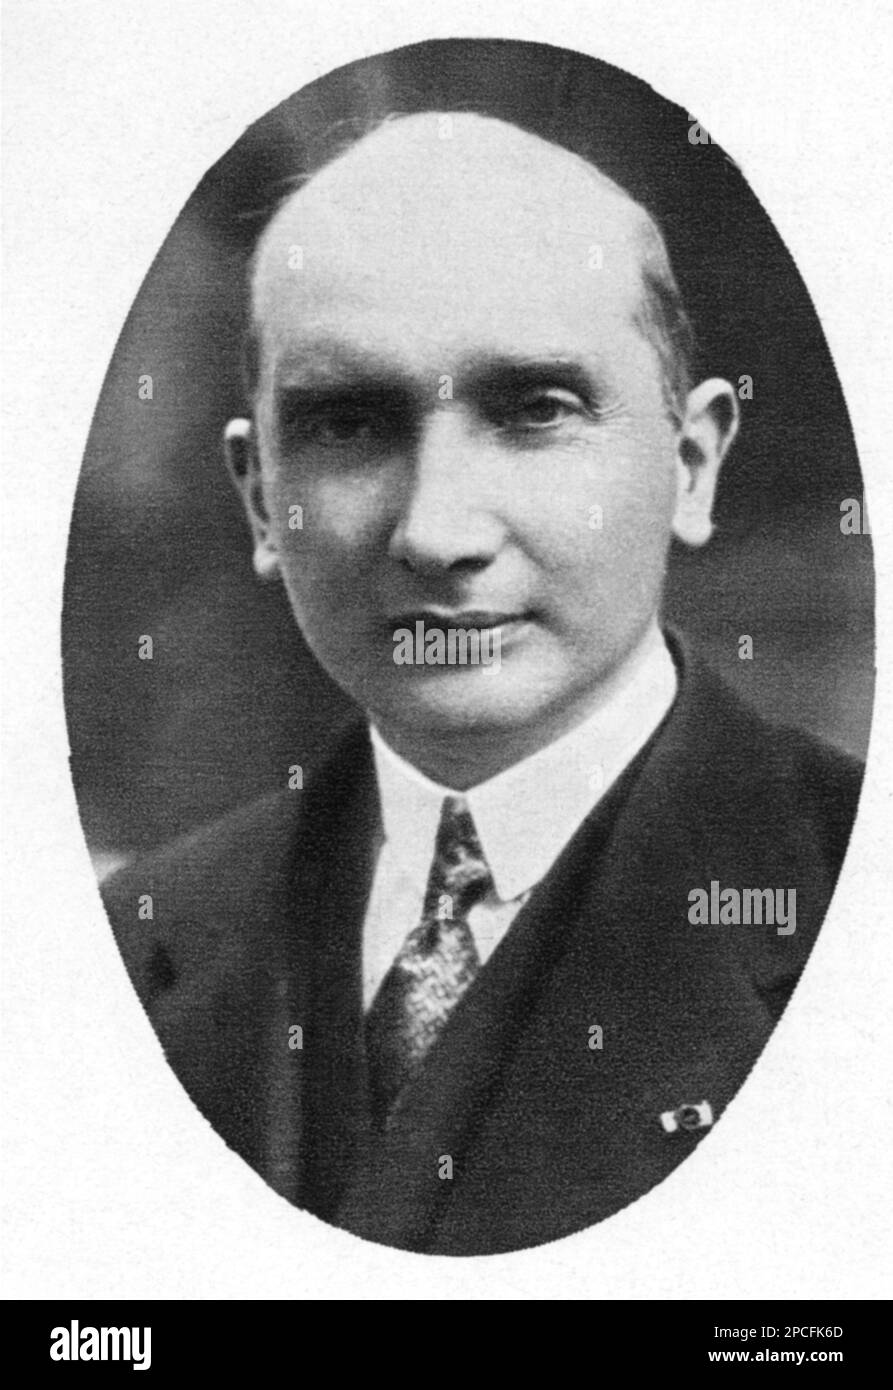 1928 : AUGUST ZALESKI ( ZALEWSKI , 1883 – 1972 ) was a Polish economist , politician and diplomat . Twice Minister of Foreign Affairs of the Republic of Poland, he served as the President of Poland within the Polish Government in Exile .   - POLITICO - POLITICA - POLITIC  - foto storiche - foto storica - portrait - ritratto - HISTORY - POLAND - POLONIA - collar - colletto - tie - cravatta  -----  Archivio GBB Stock Photo